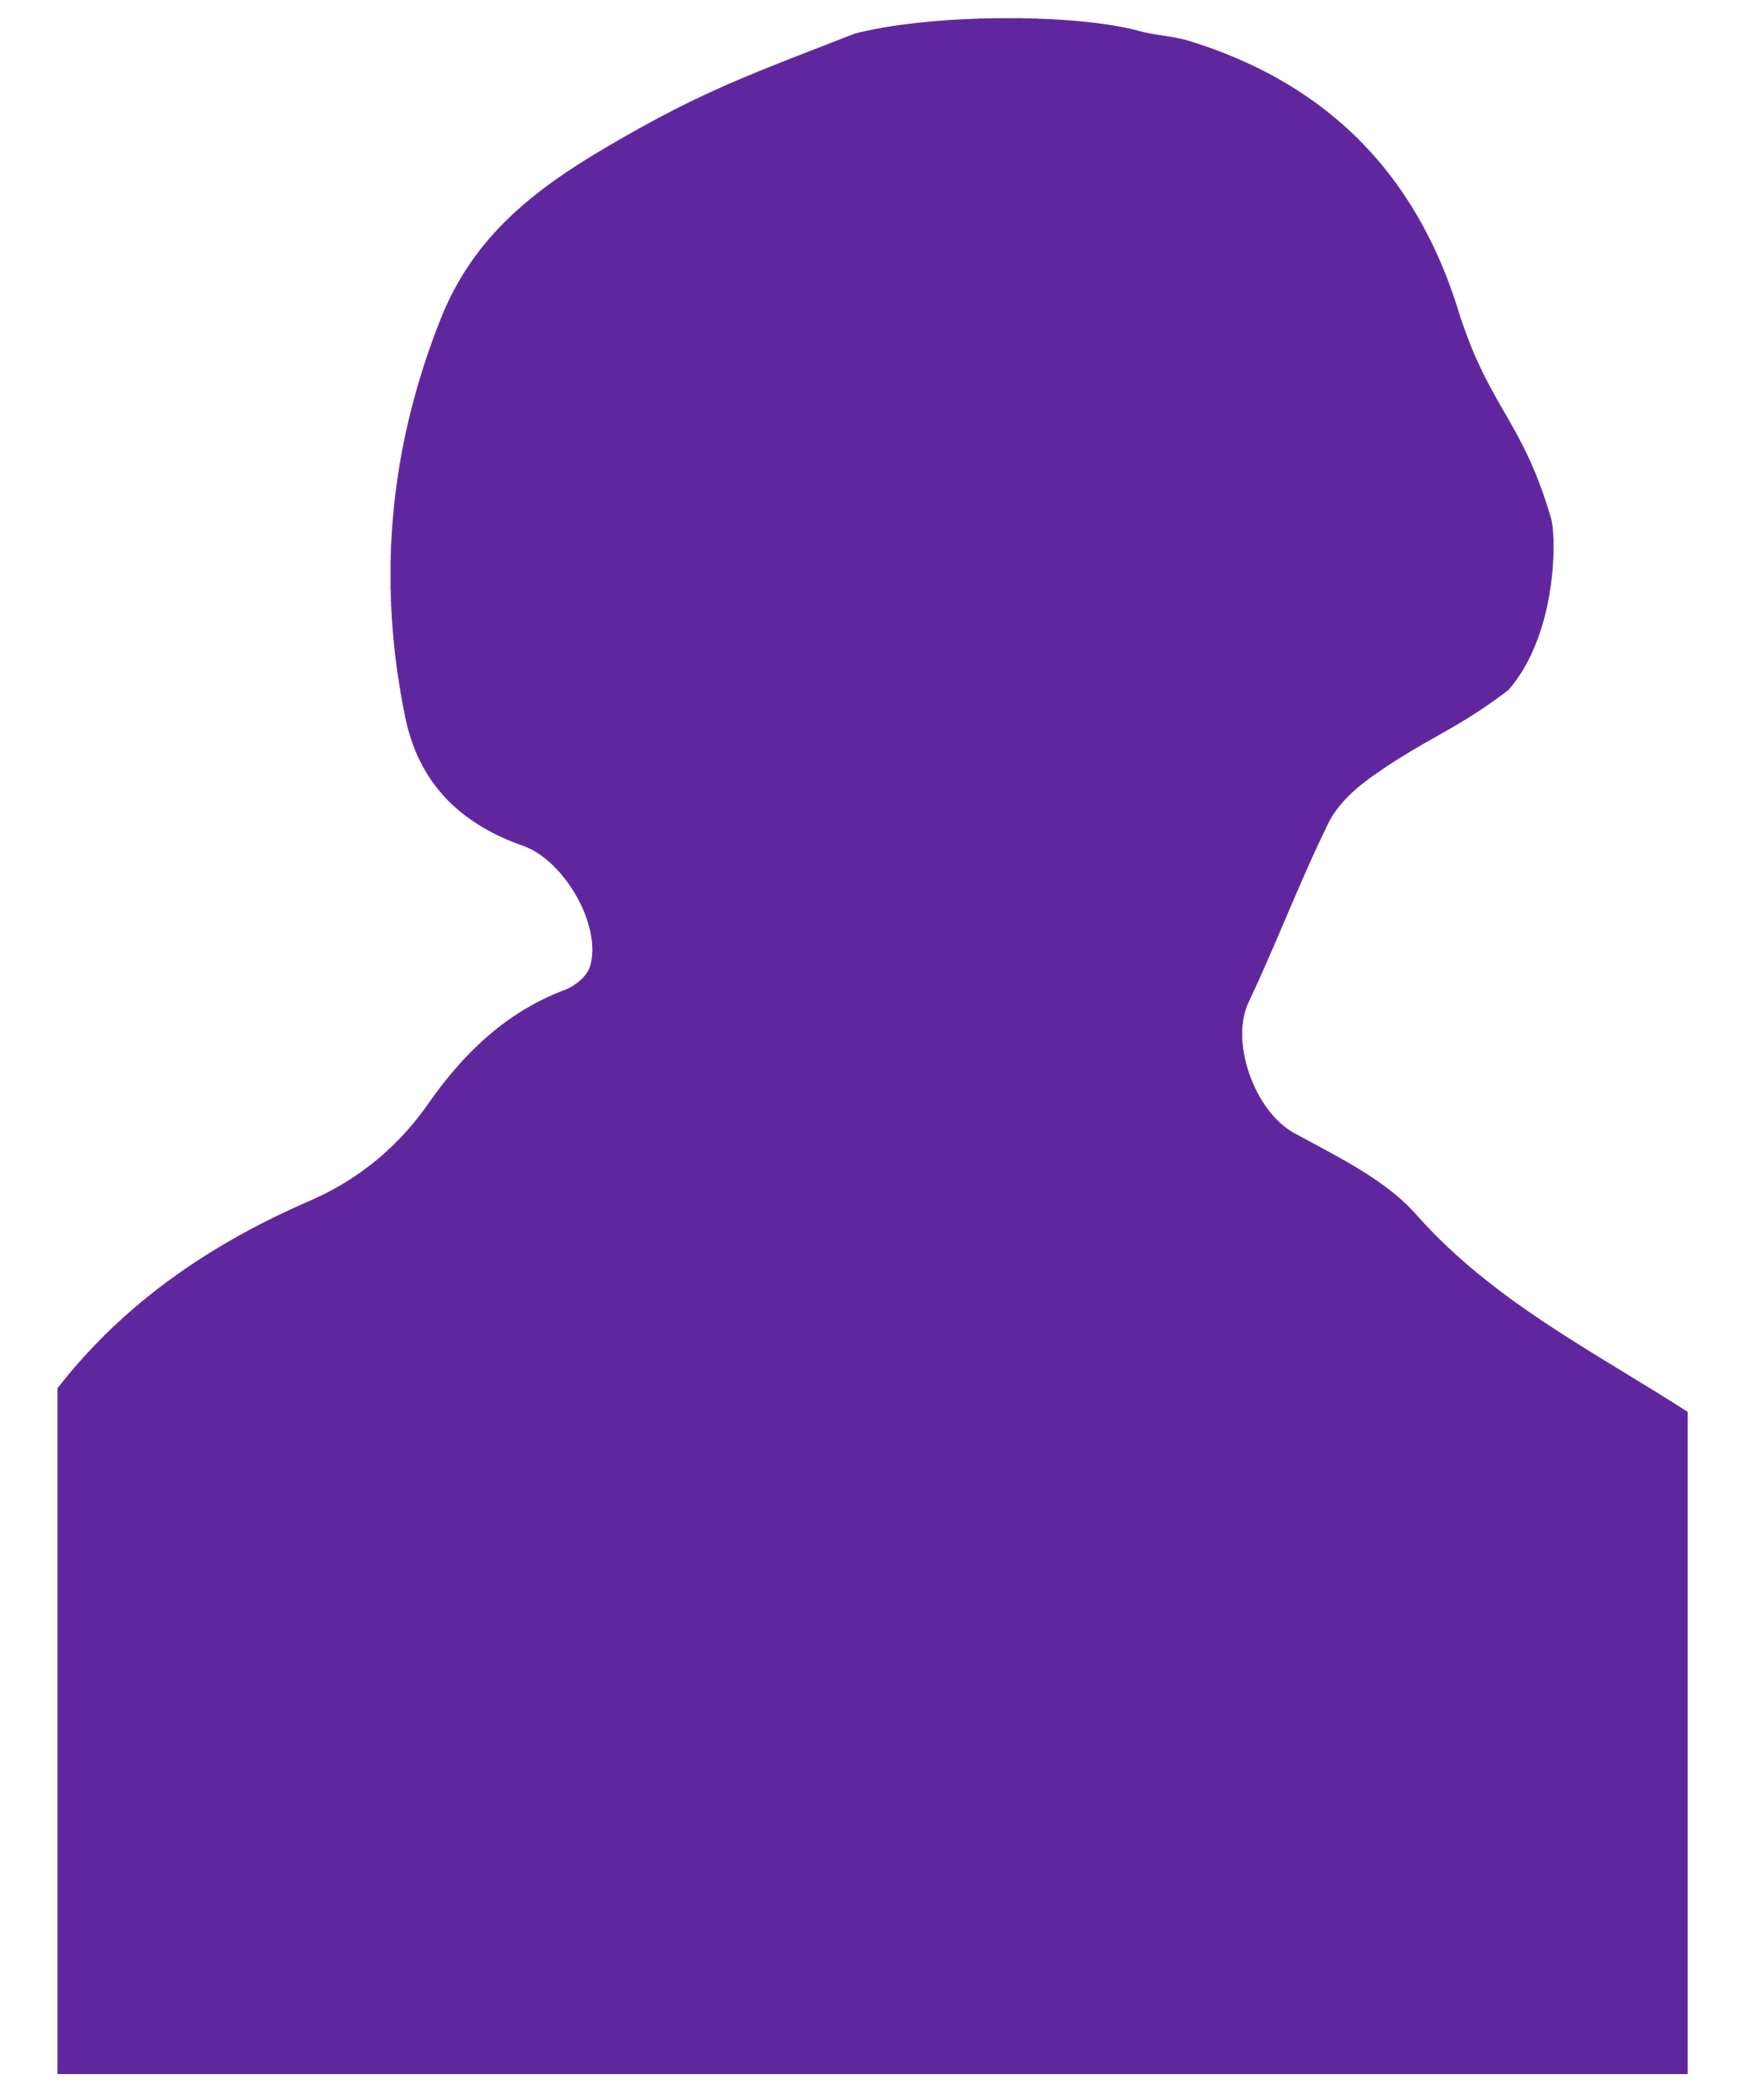 Purple silhouette of Adela Pankhurst